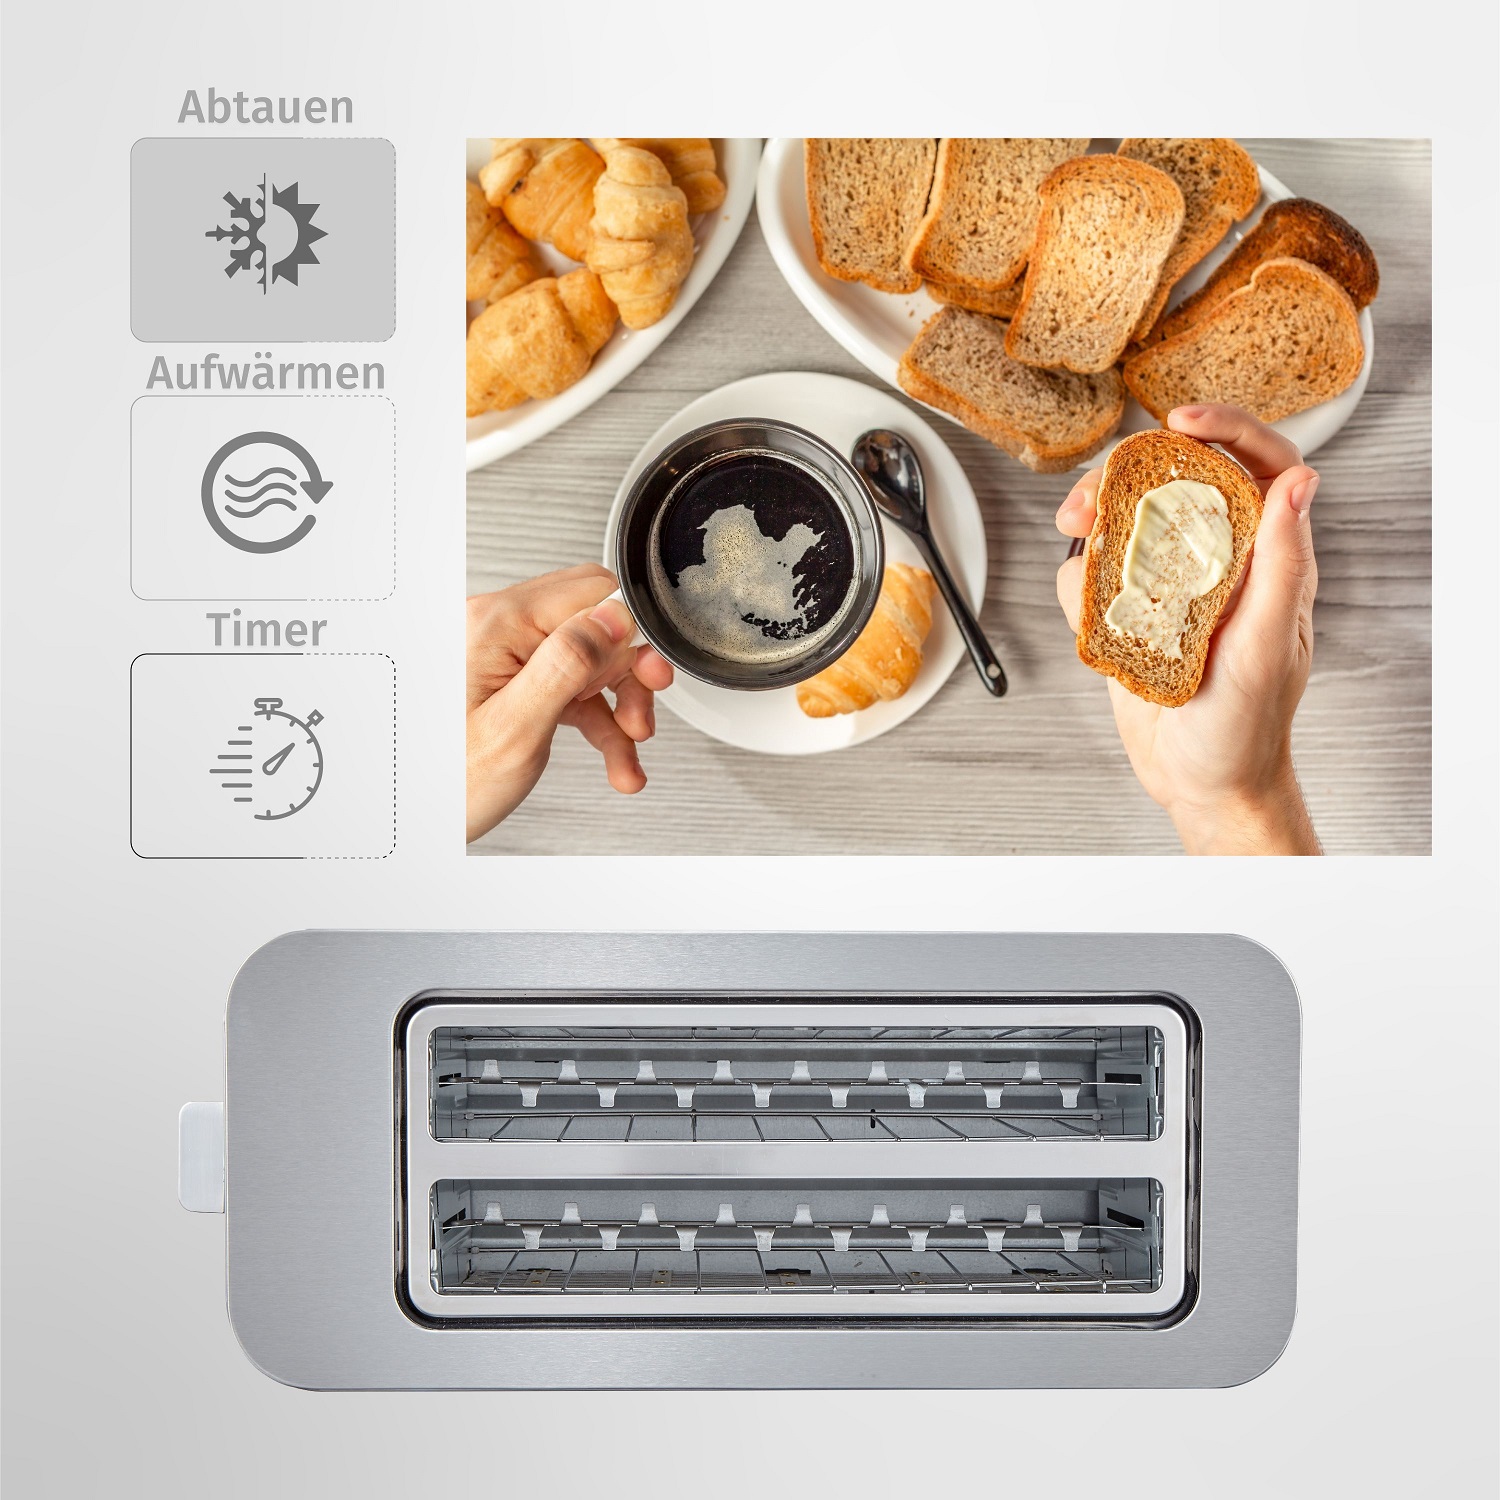 Zilan ZLN-6234 Toaster